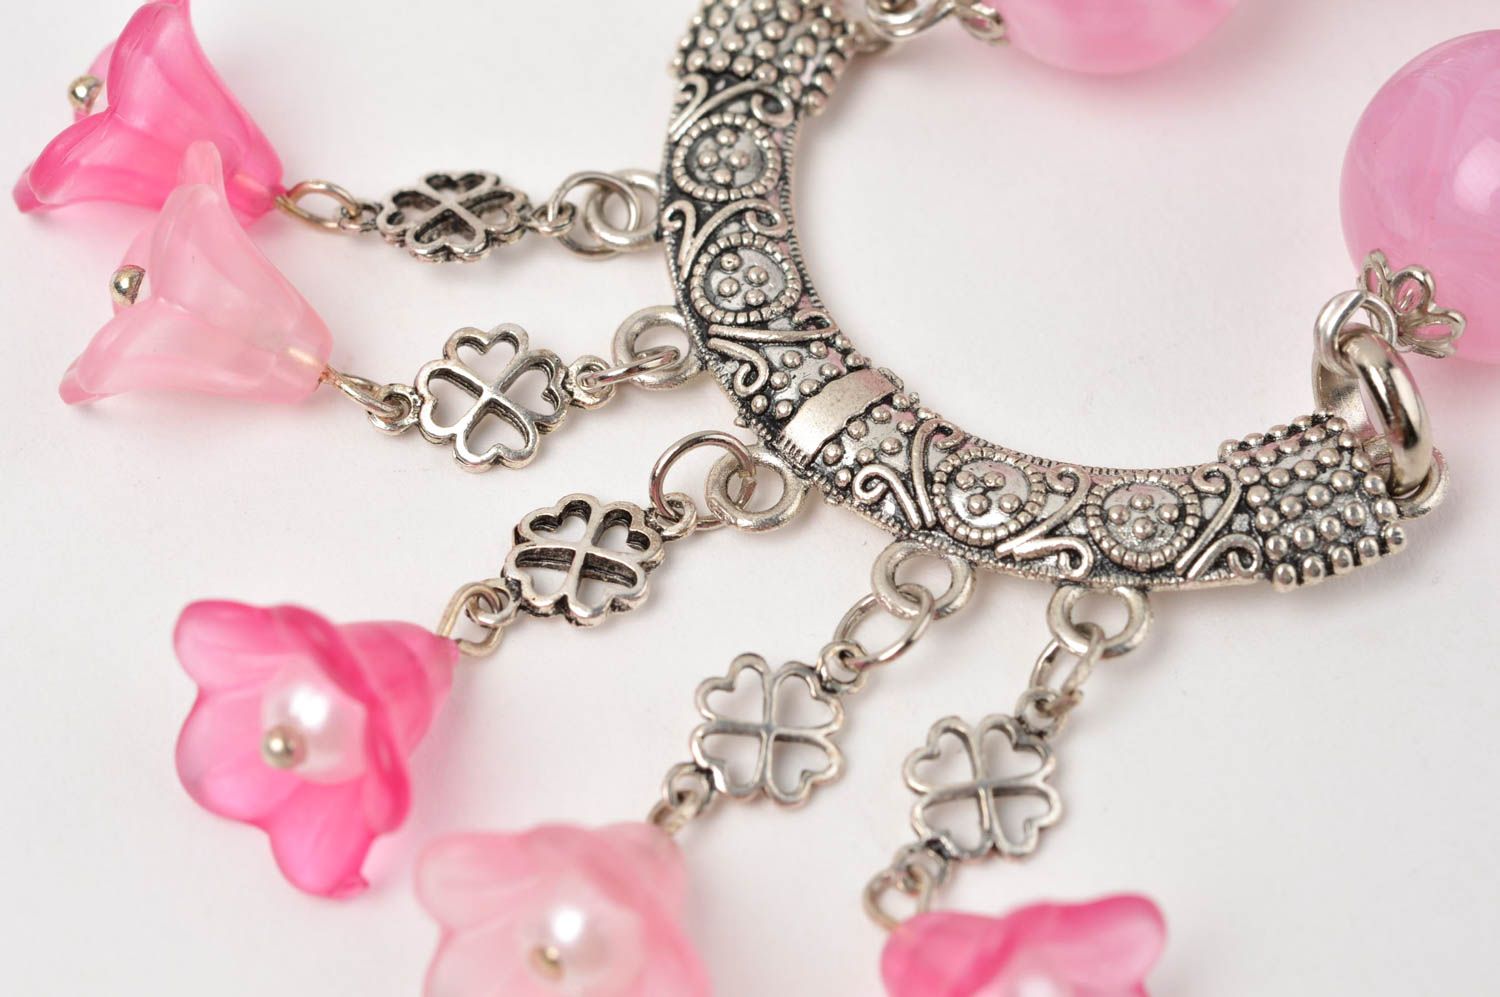 Handmade beaded necklace tender pink necklace elegant designer accessory photo 5